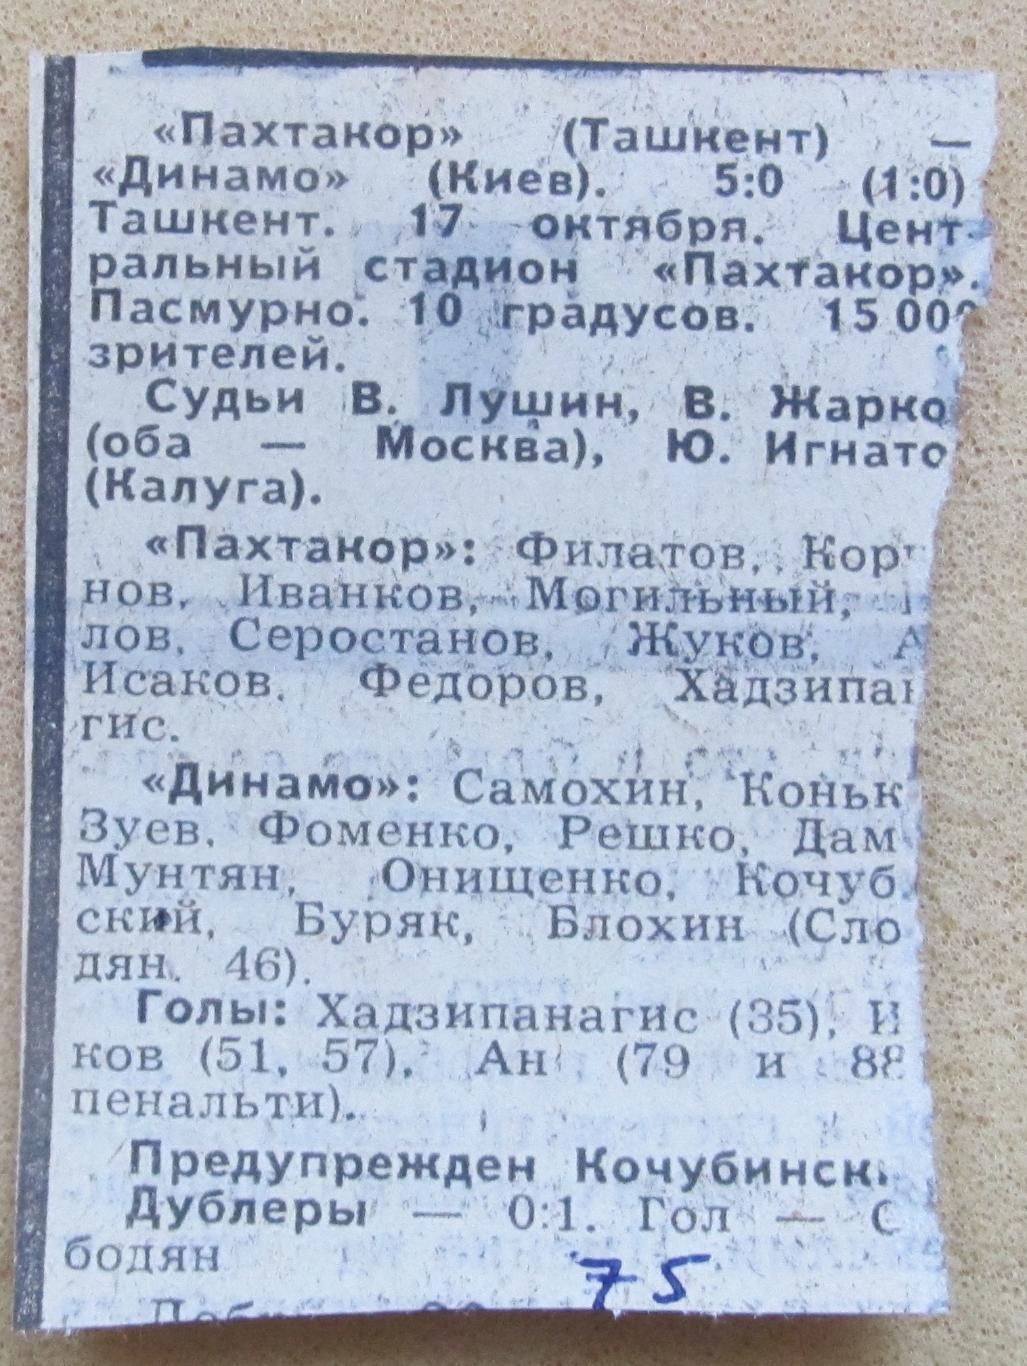 Пахтакор Ташкент - Динамо Киев 17.10.1975